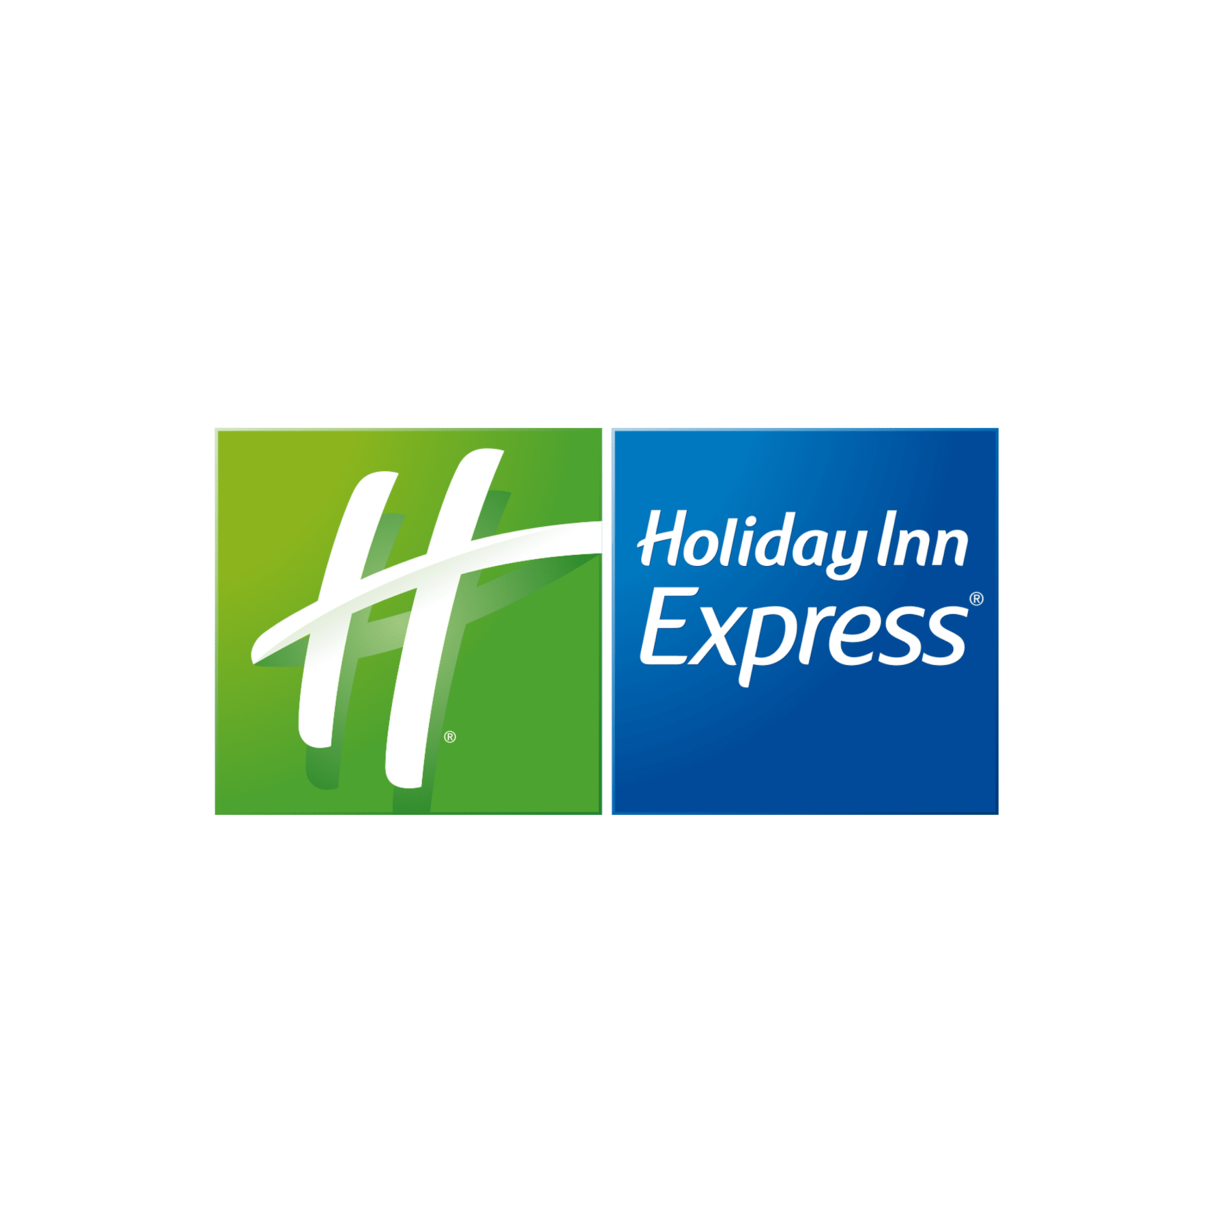 Holiday Inn Express Ebus